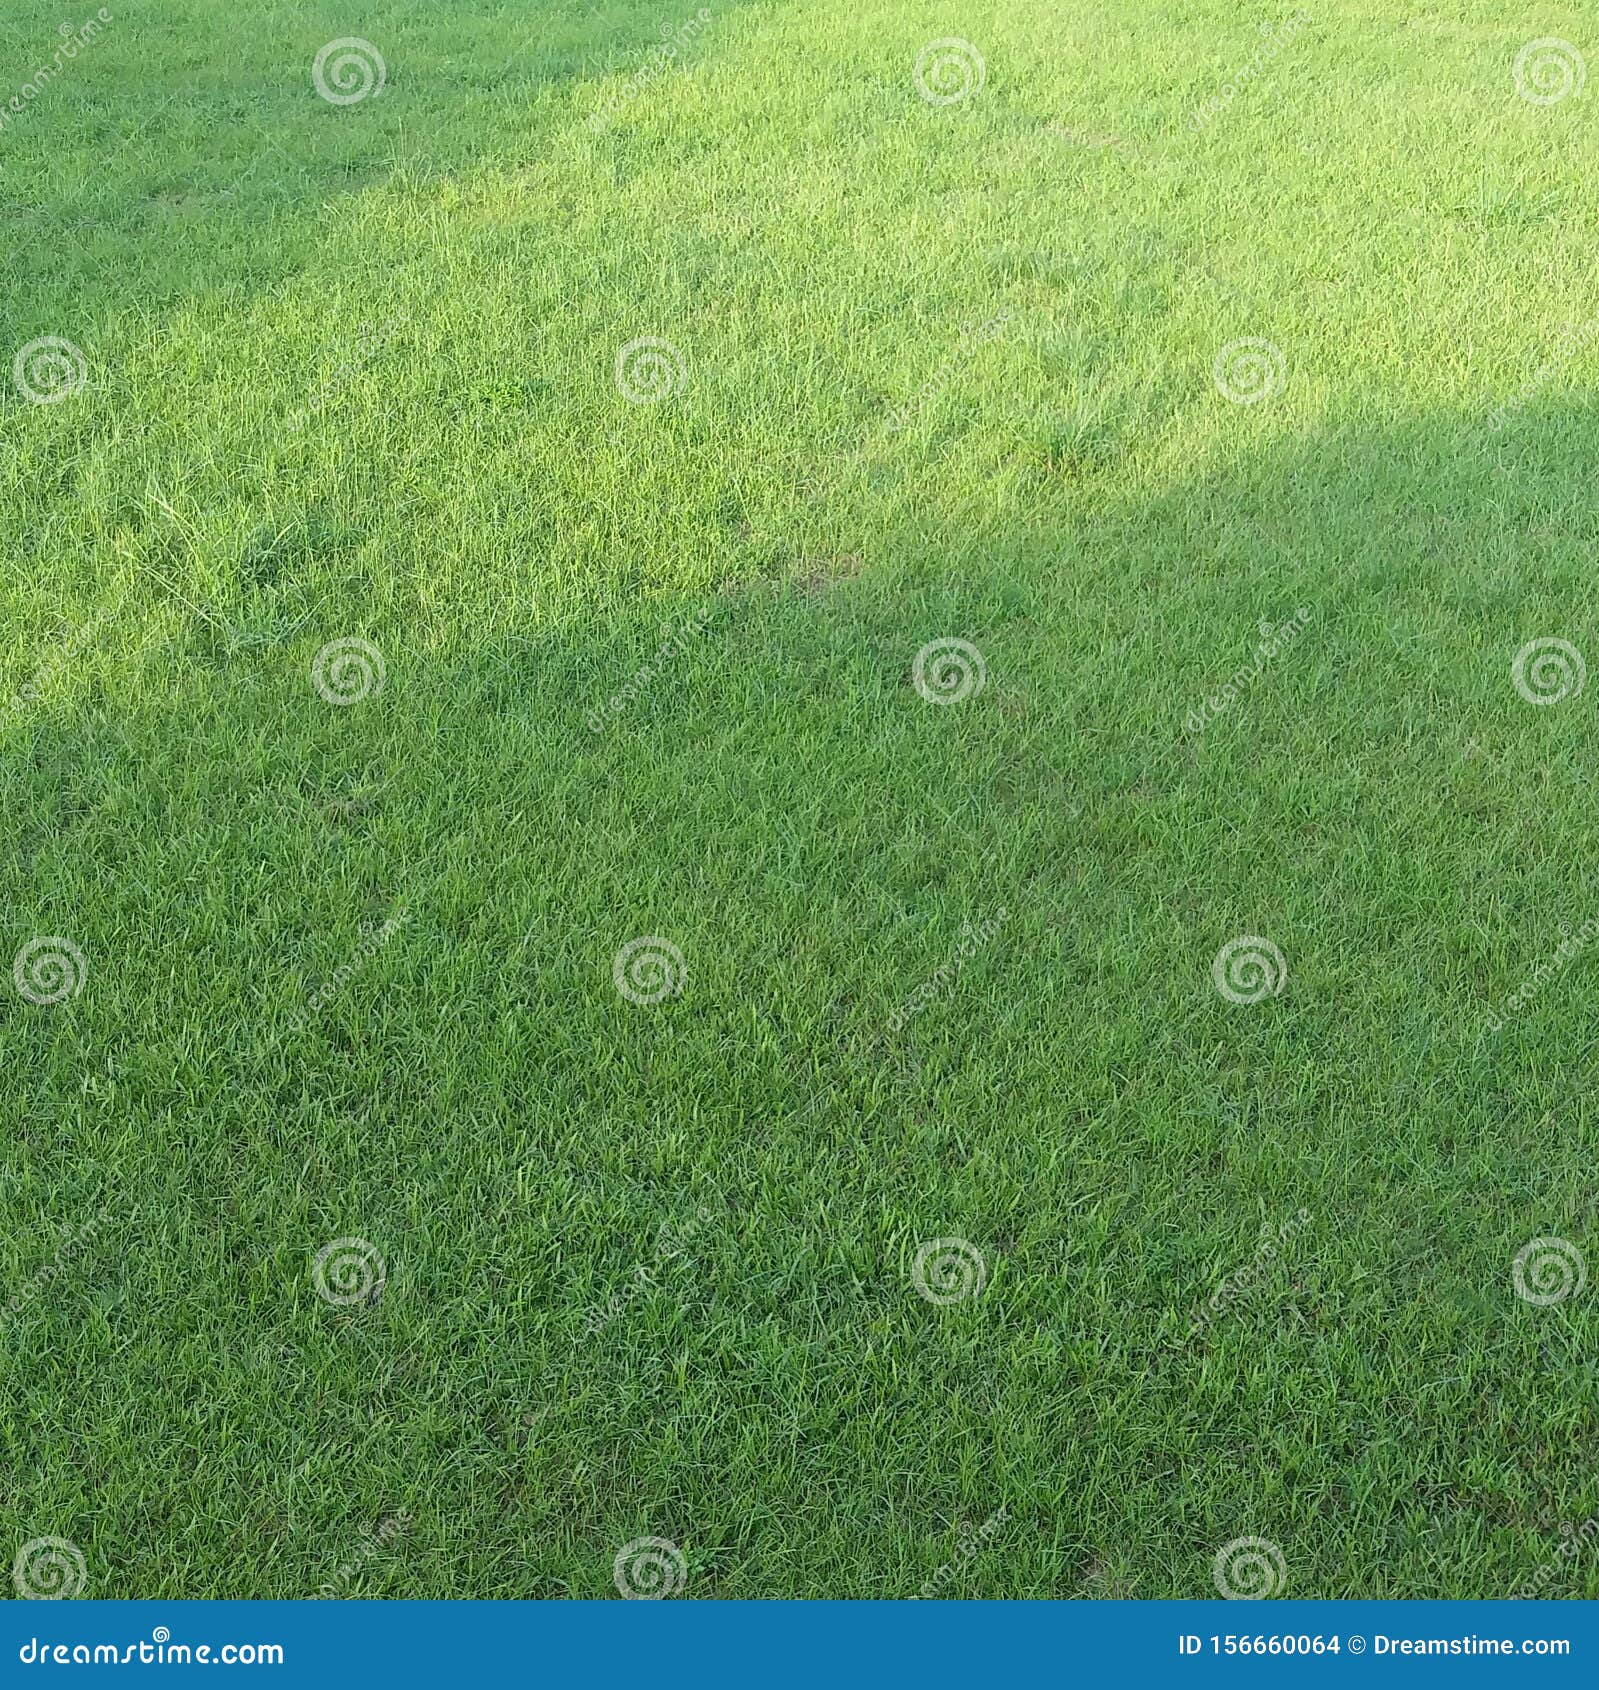 The Green Carpet stock photo. Image of carpet, grass - 156660064